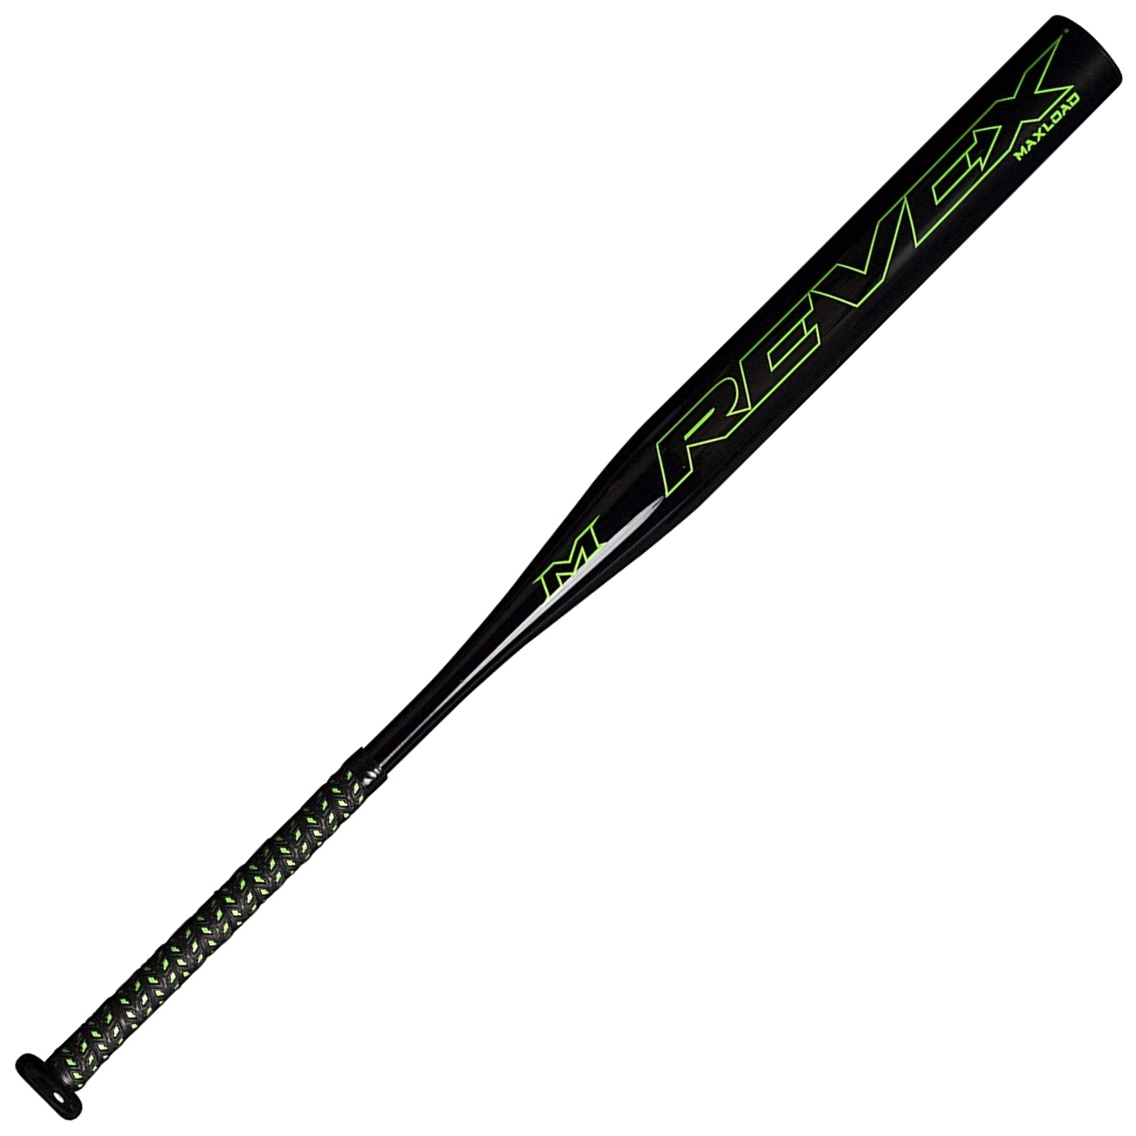 miken-rev-ex-14-one-piece-maxload-slowpitch-softball-bat-34-inch-28-oz MREV21-3-28 Miken  The Miken 2021 Rev-Ex Maxload all association bat delivers a solid